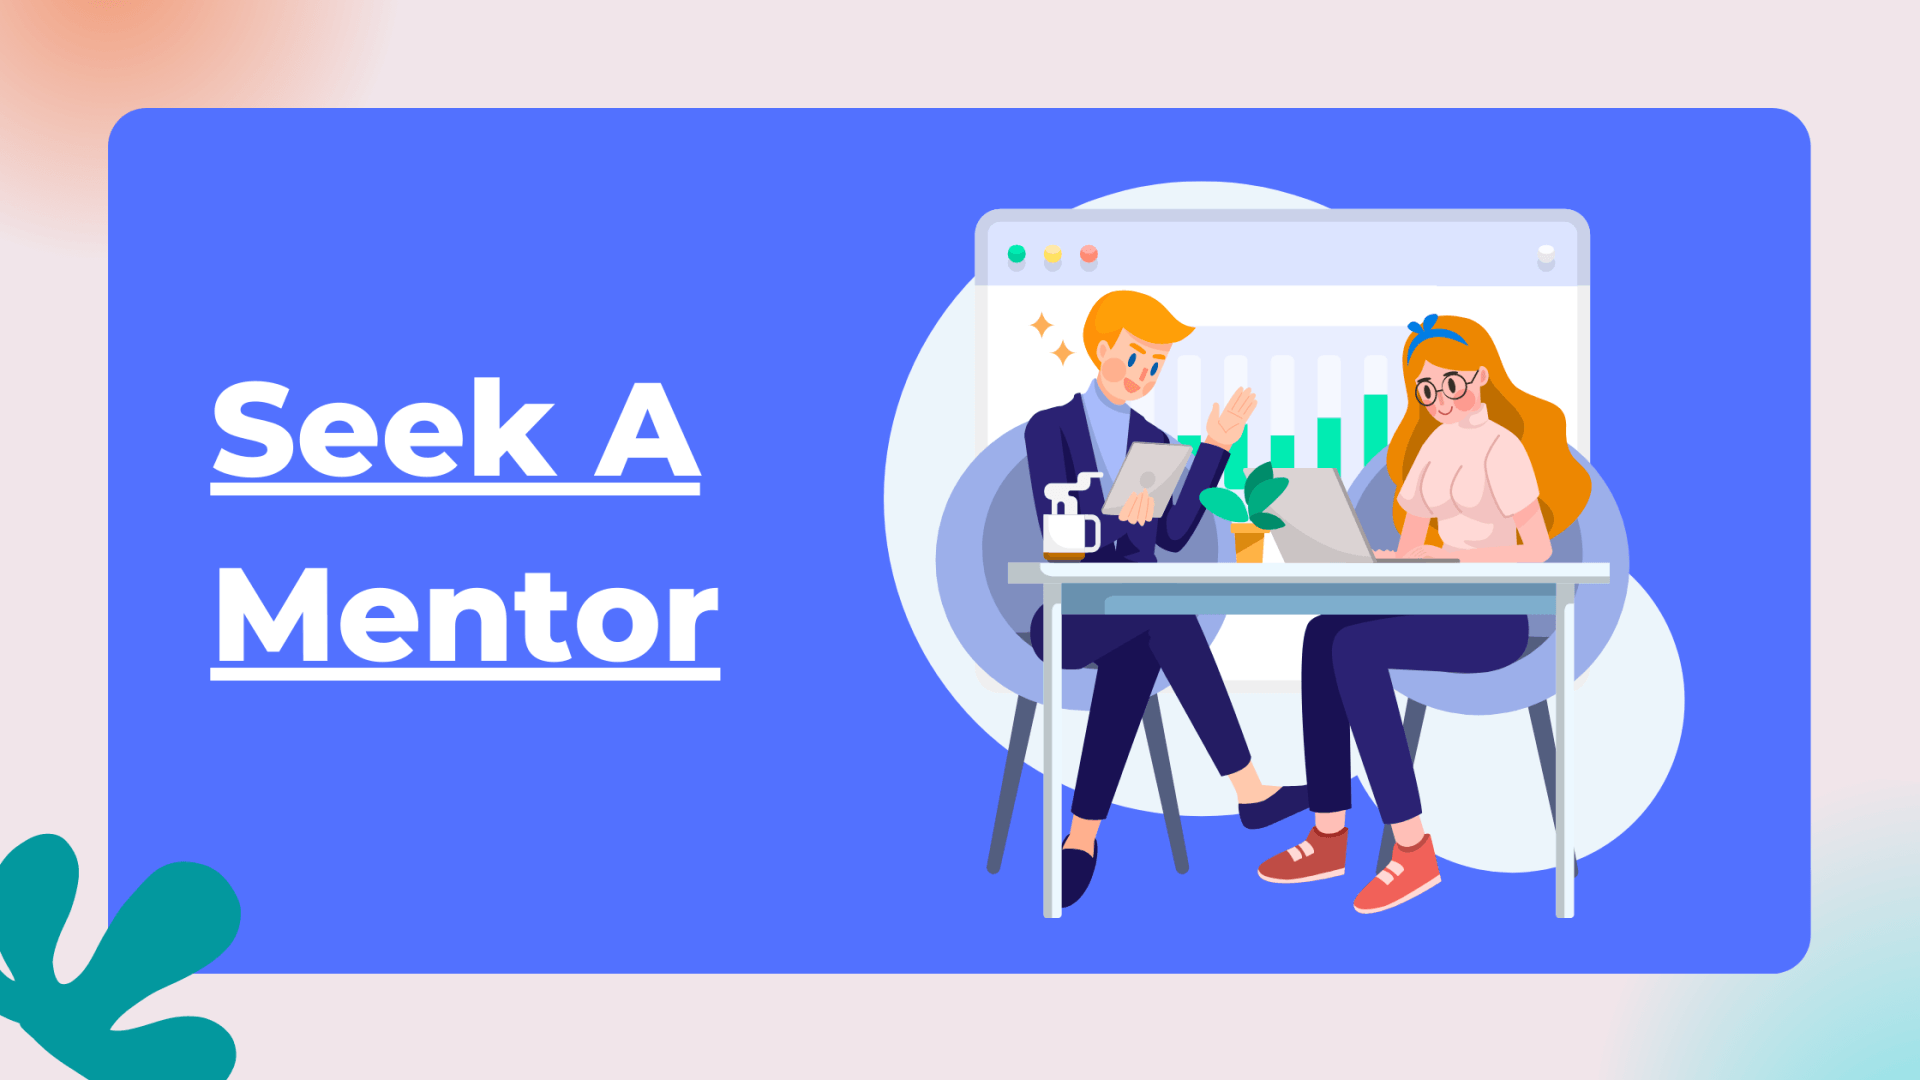 seek a mentor as a freelancer